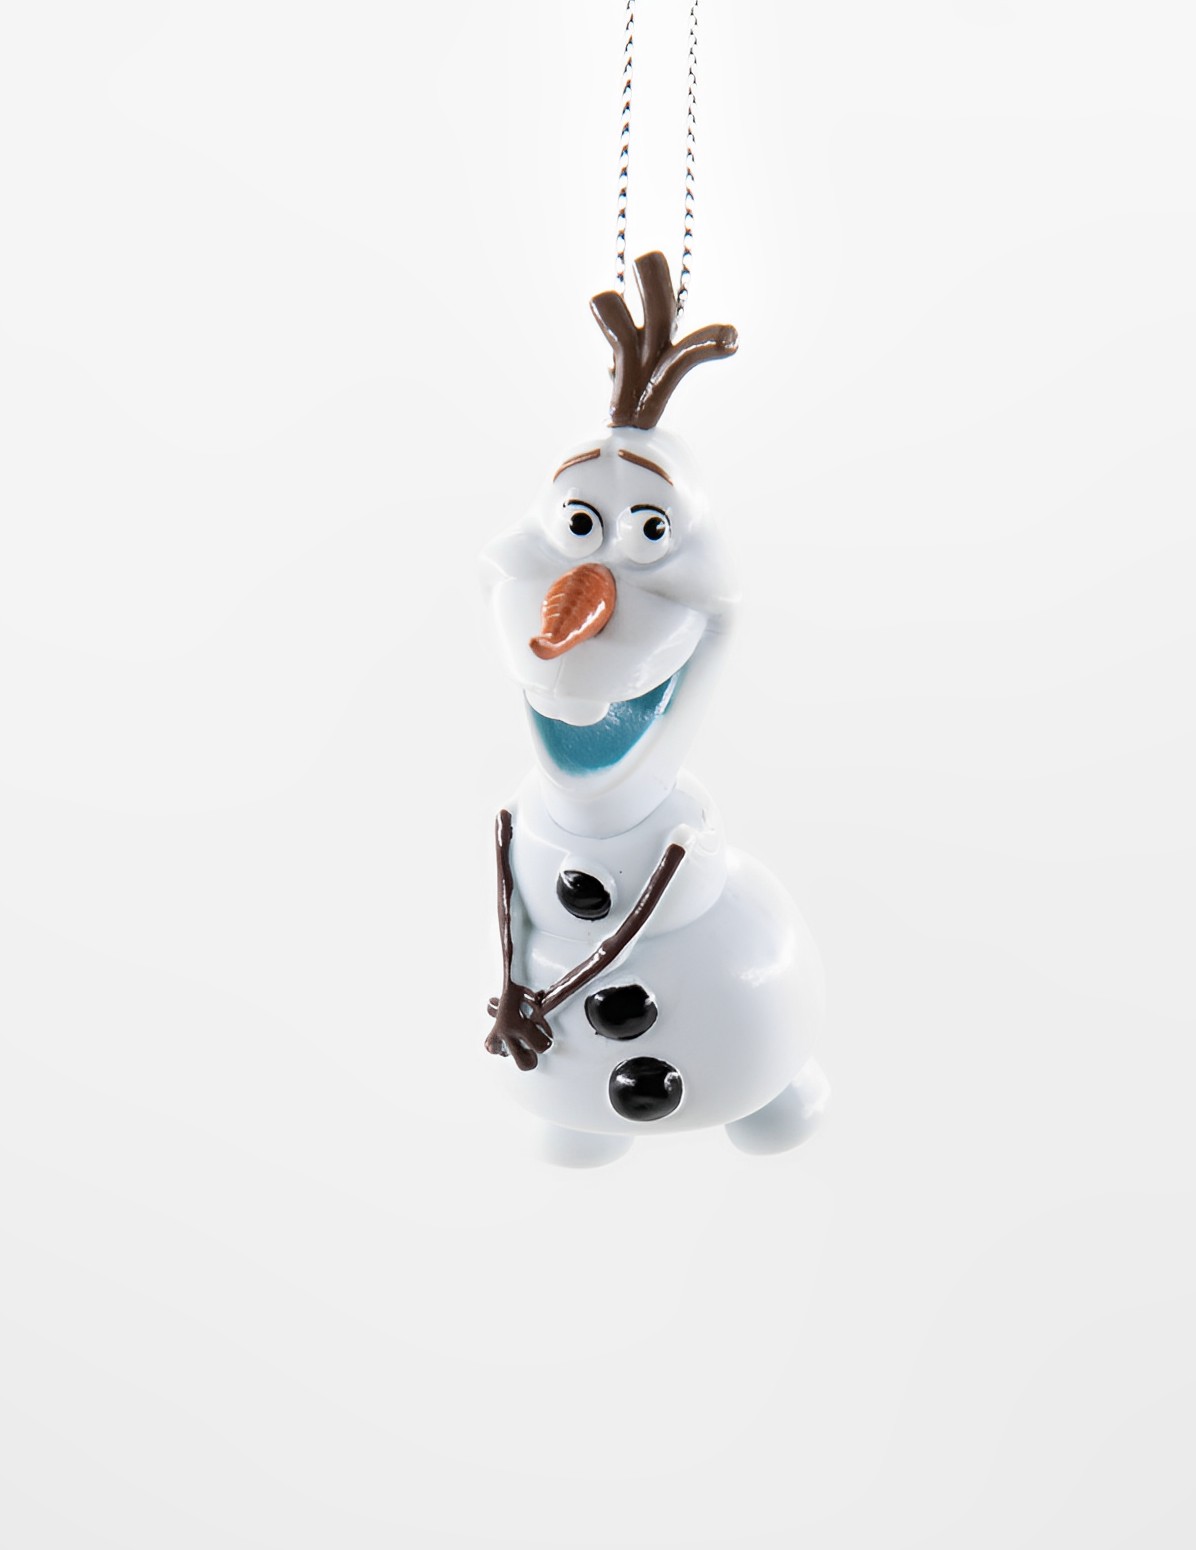 Kurt S. Adler Disney Frozen Olaf Weihnachtsschmuck  